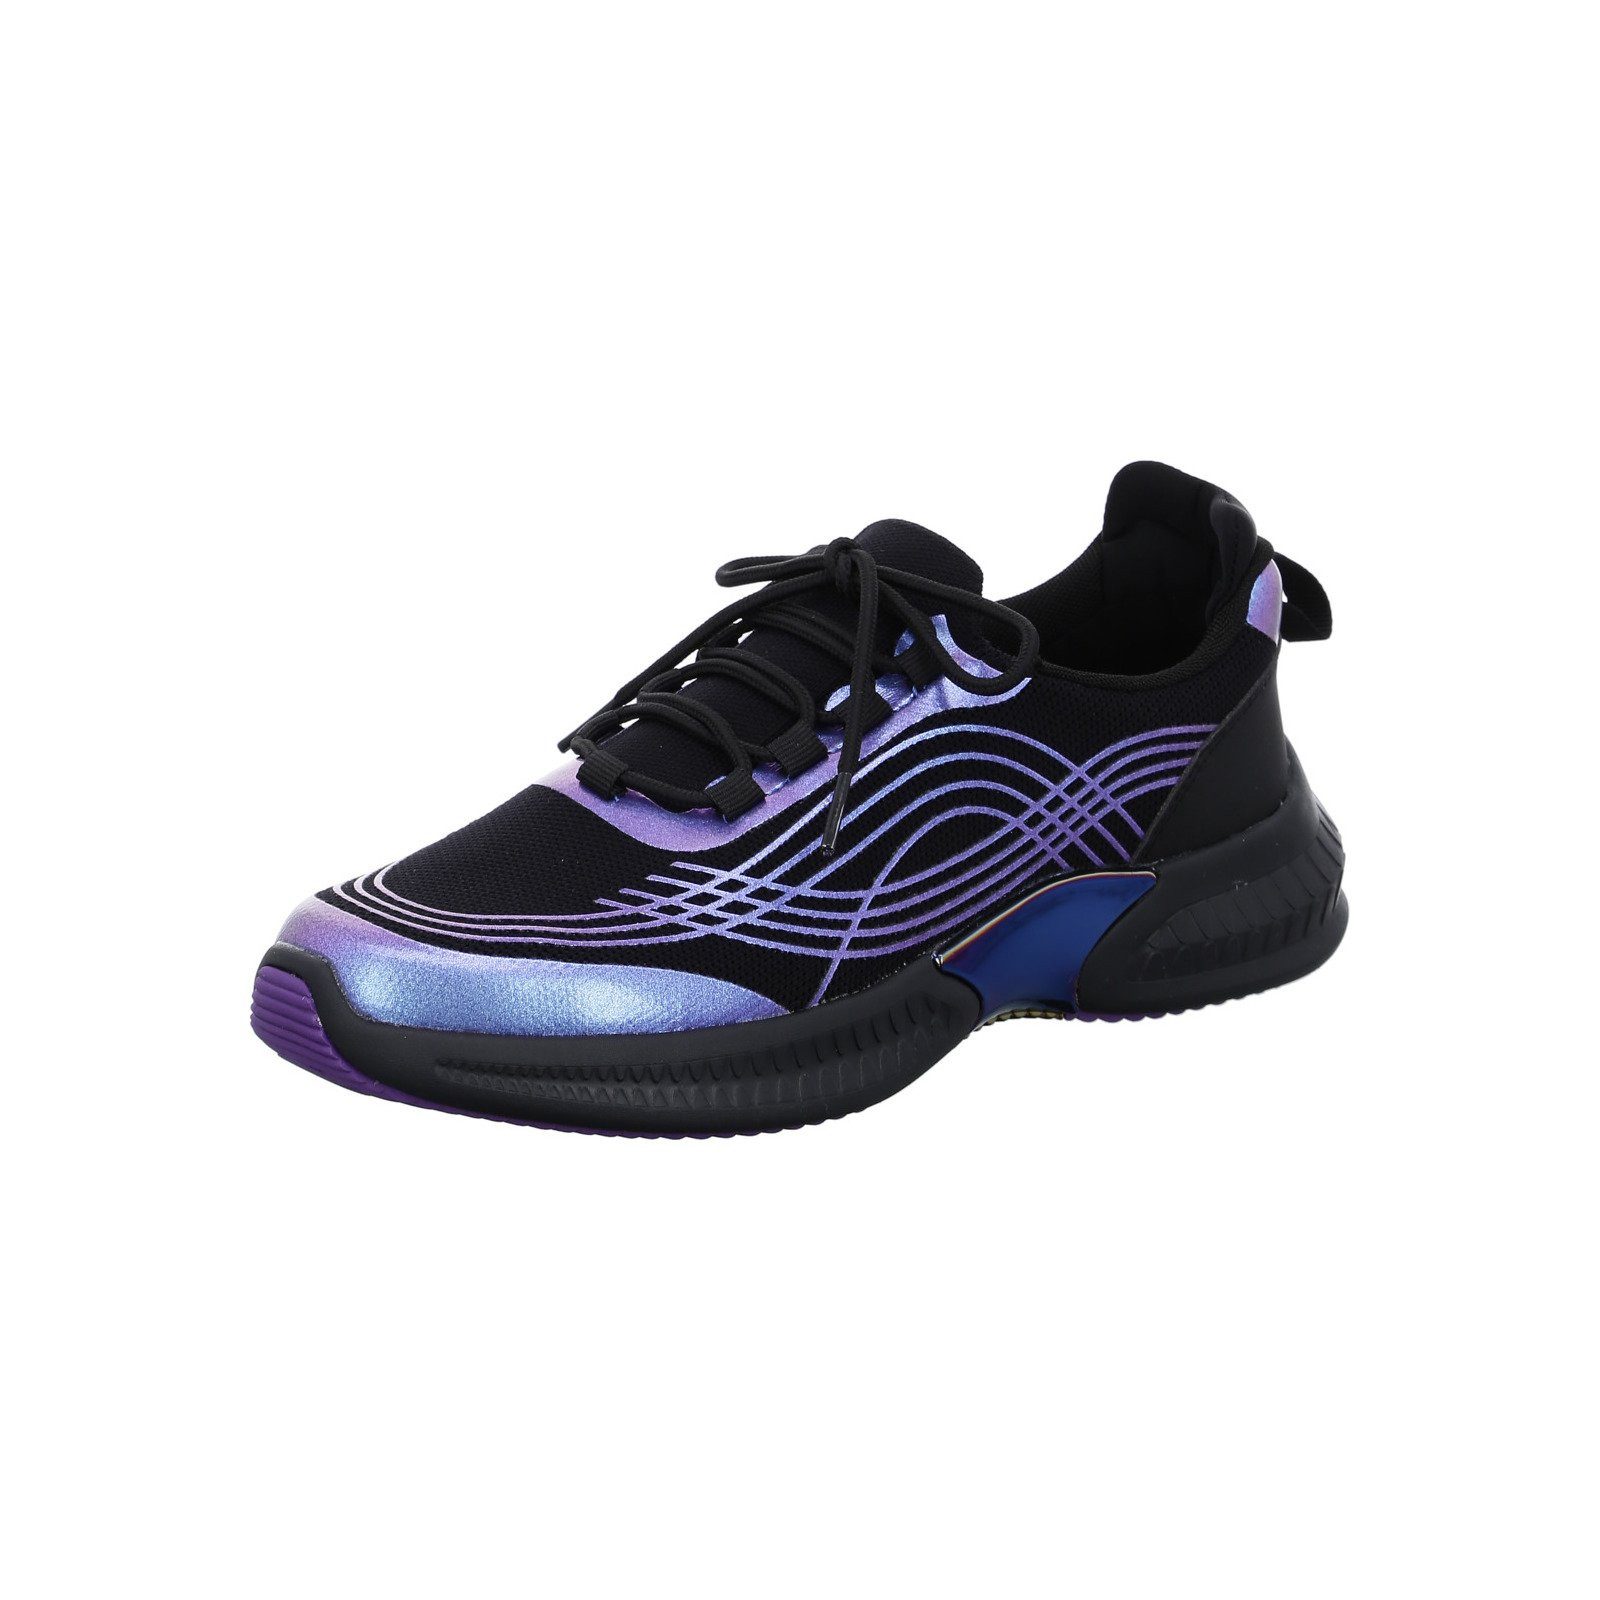 Ara Athen - Damen Schuhe Schnürschuh Sneaker Materialmix schwarz